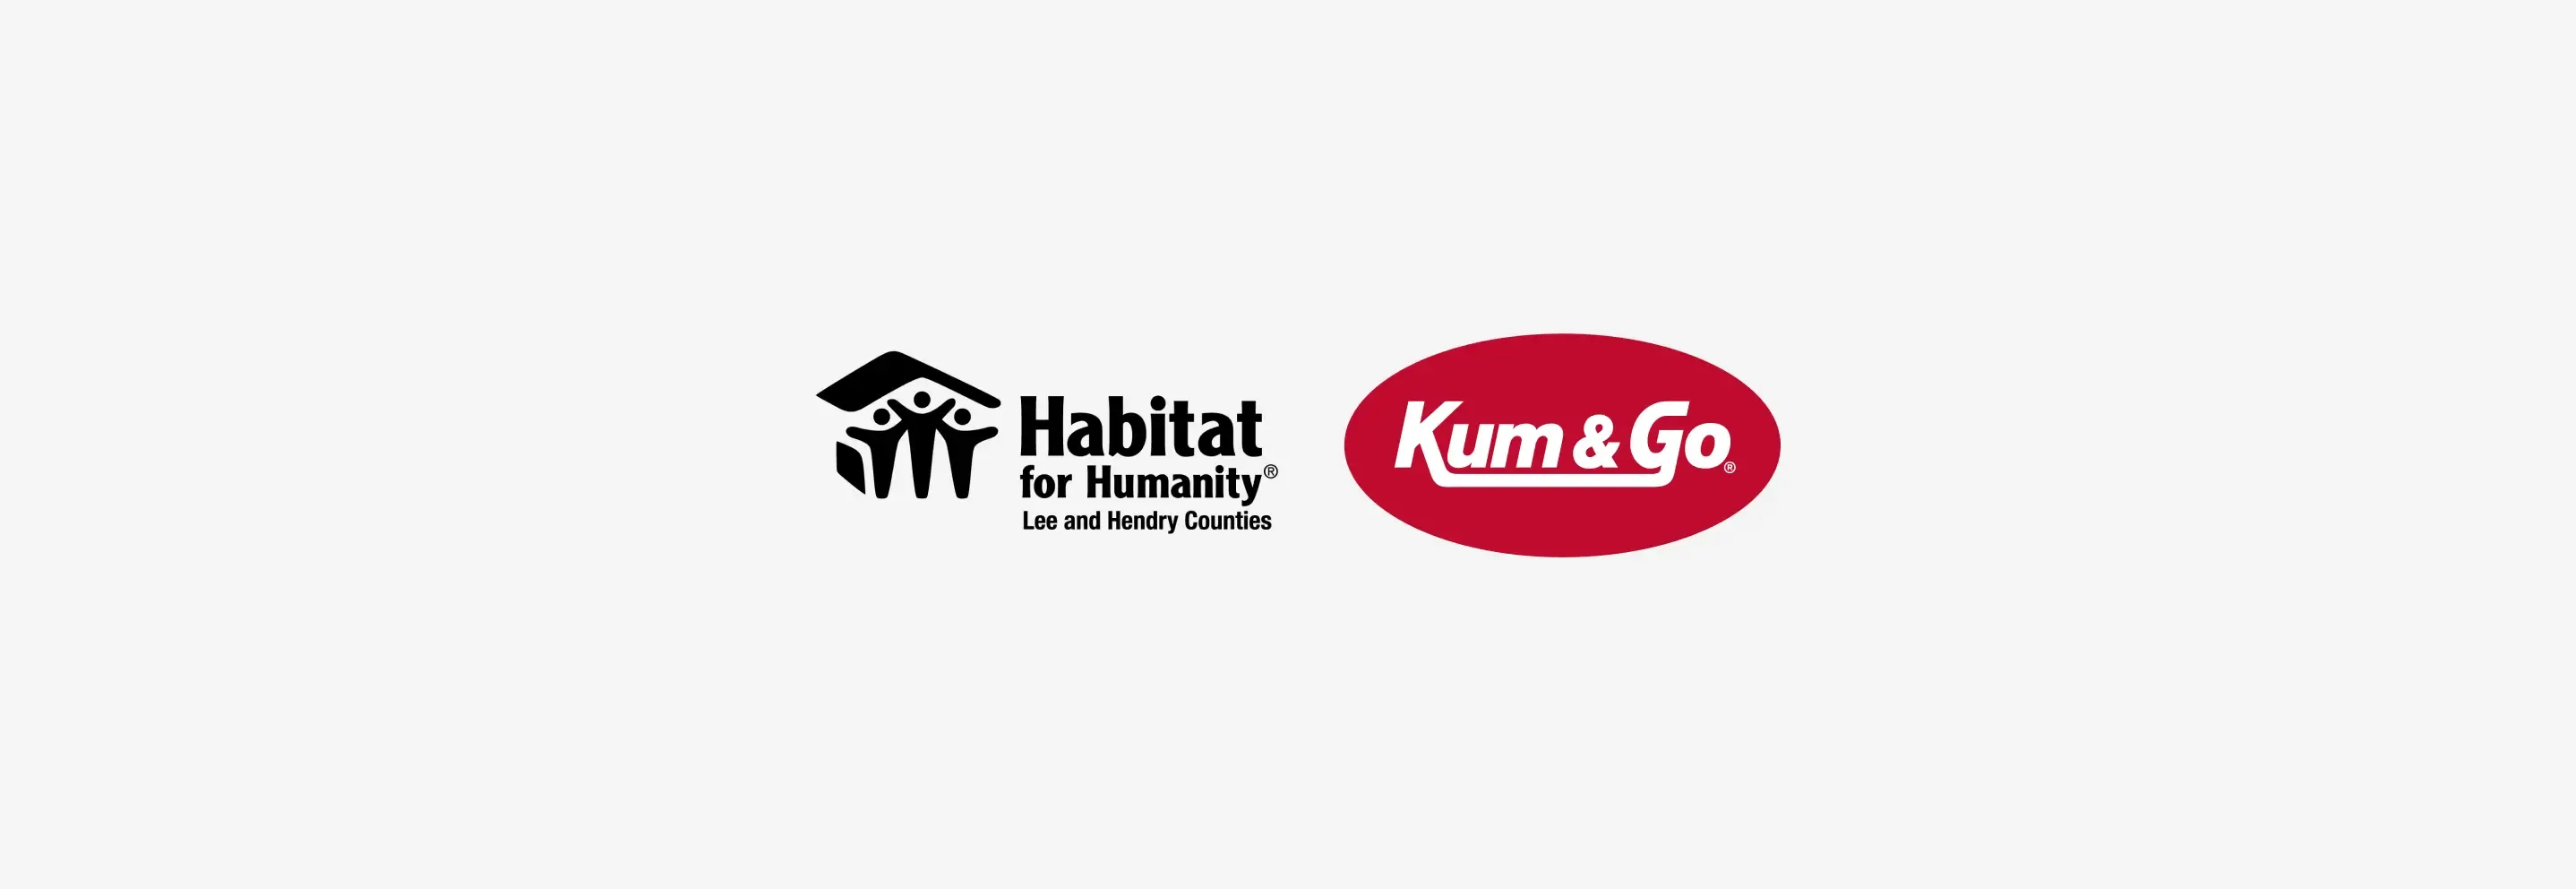 Kum & Go and Habitat for Humanity celebrate 10 years of partnership